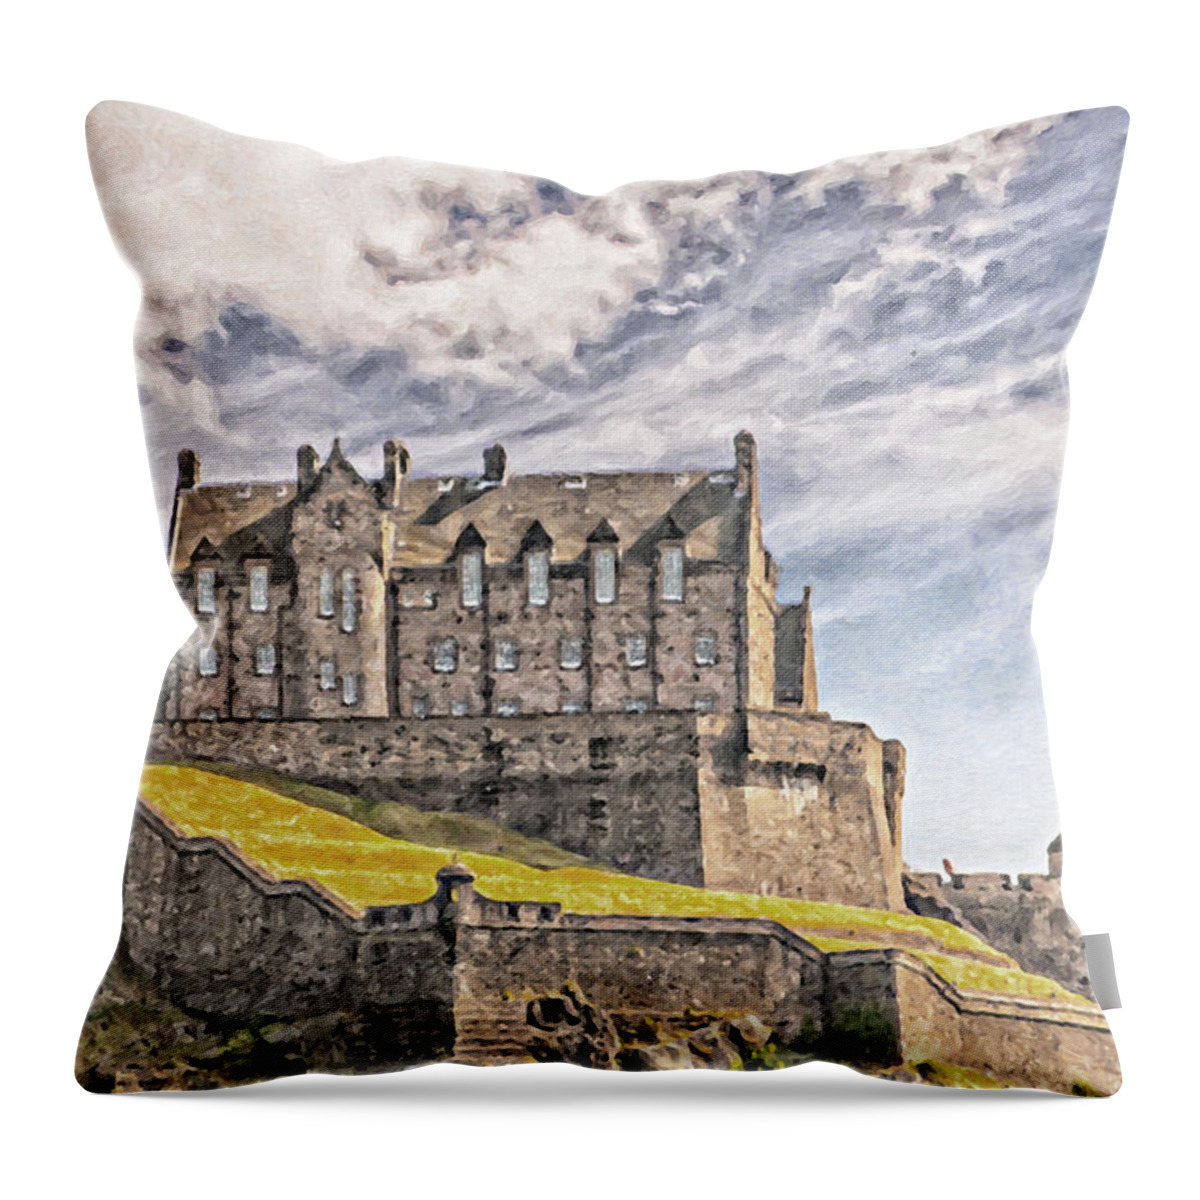 Oil Throw Pillow featuring the painting Edinburgh Castle Painting by Antony McAulay